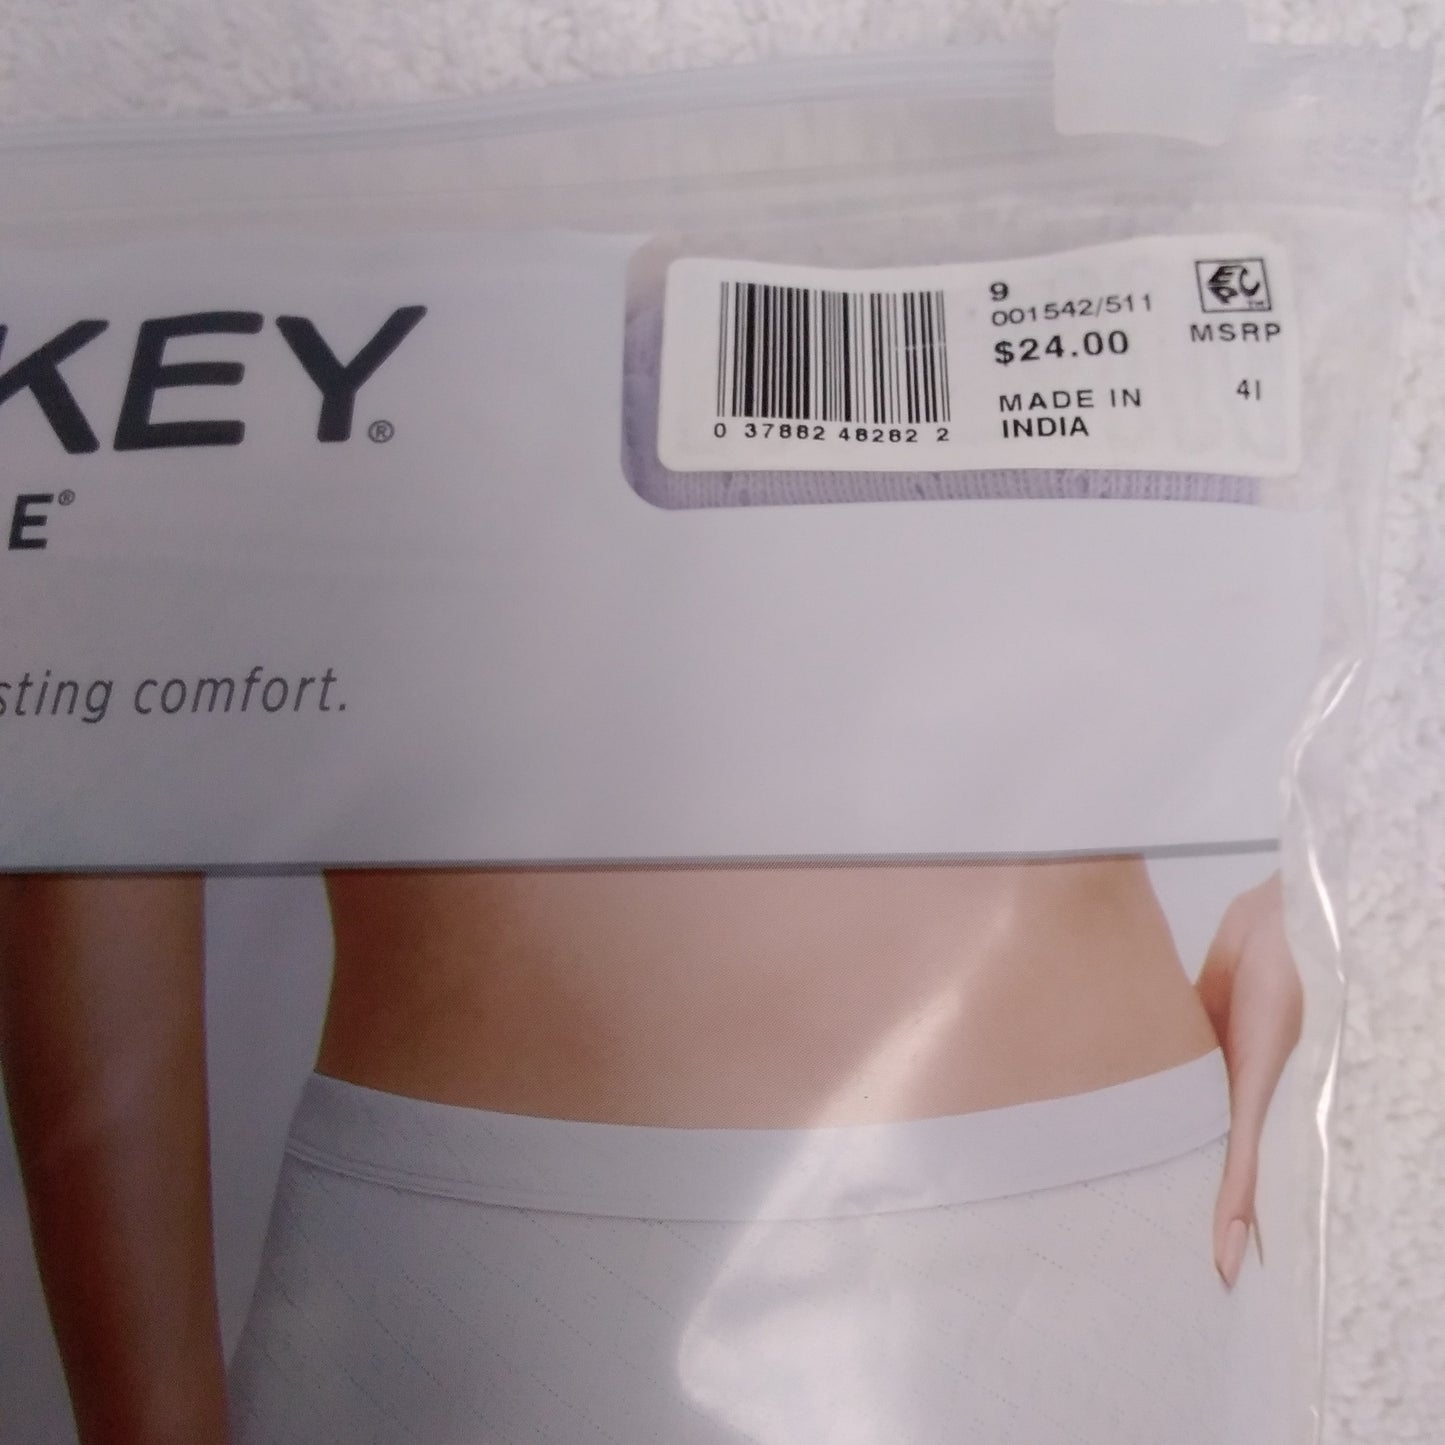 NWT - Jockey Elance Breathe Comfort 100% Cotton Brief Panties 3-Pack - Size: 9/XXL